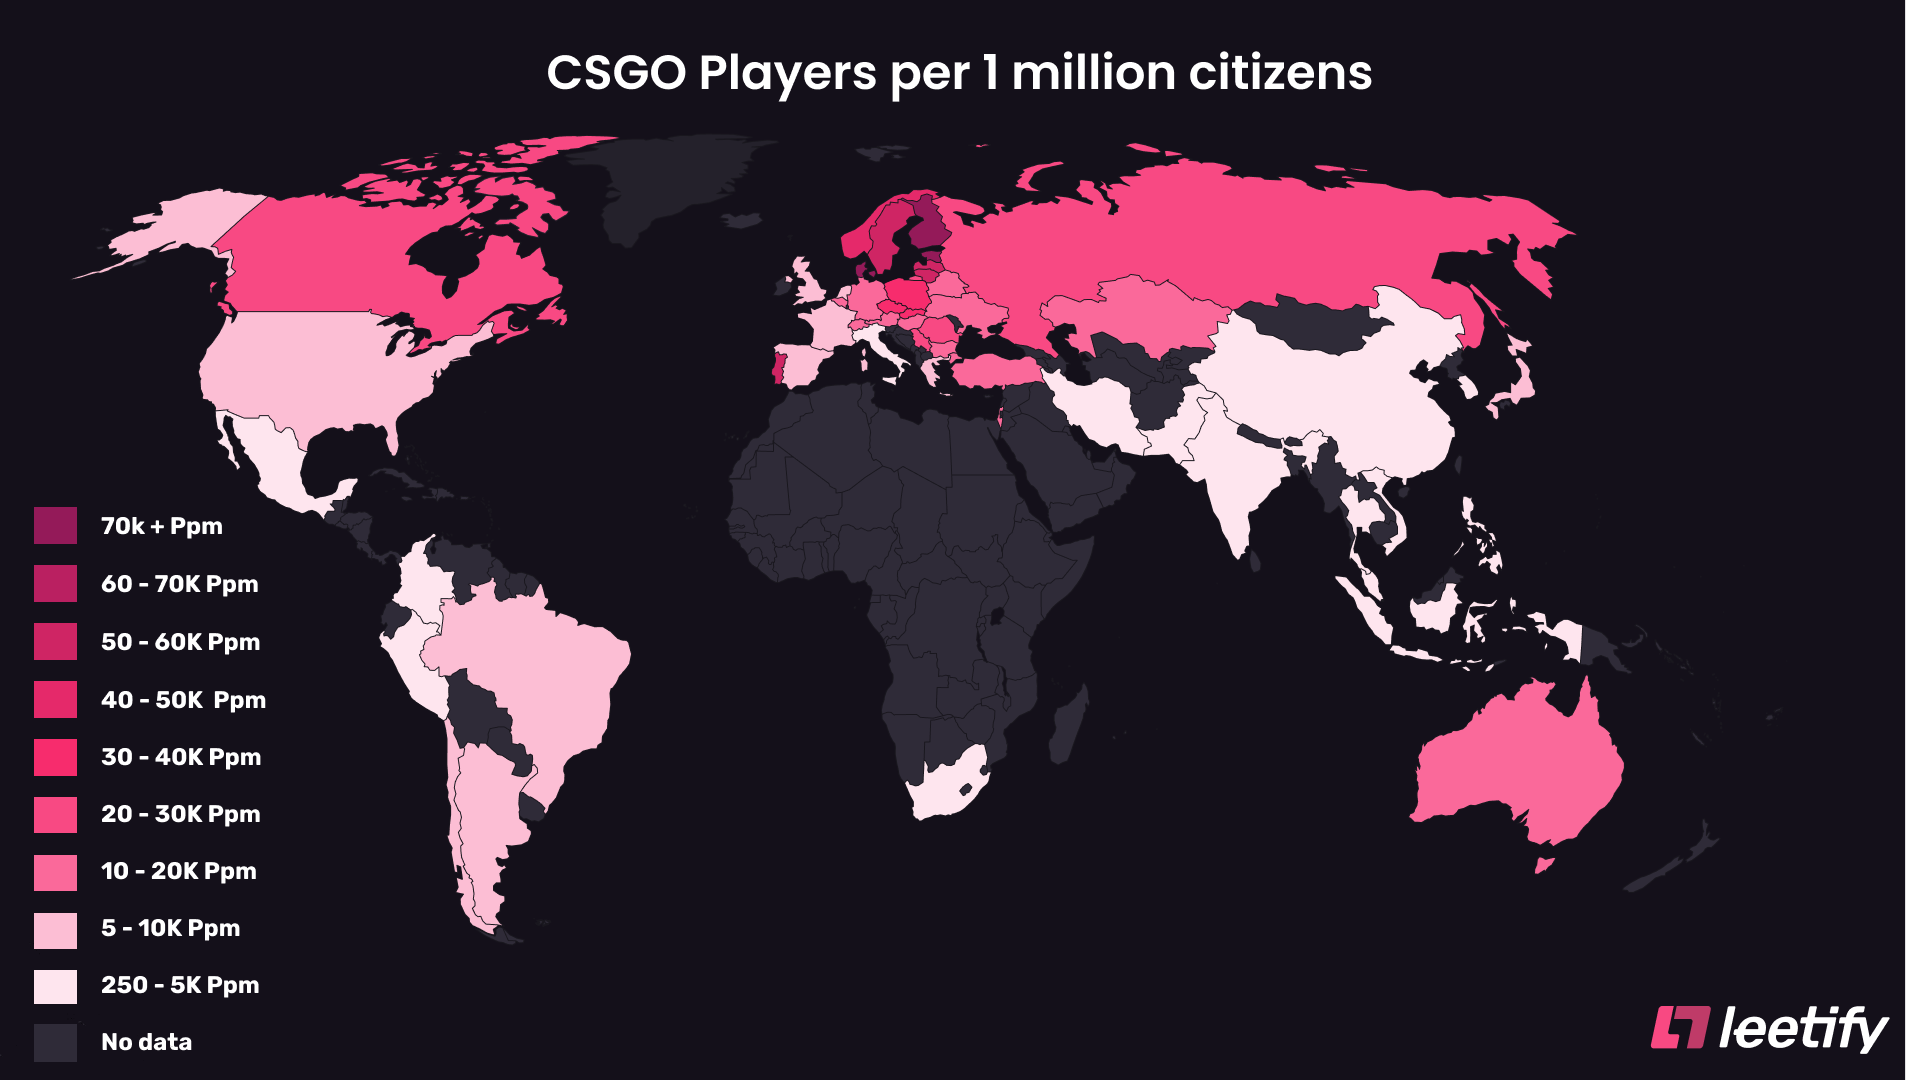 Amount of CSGO players per capita